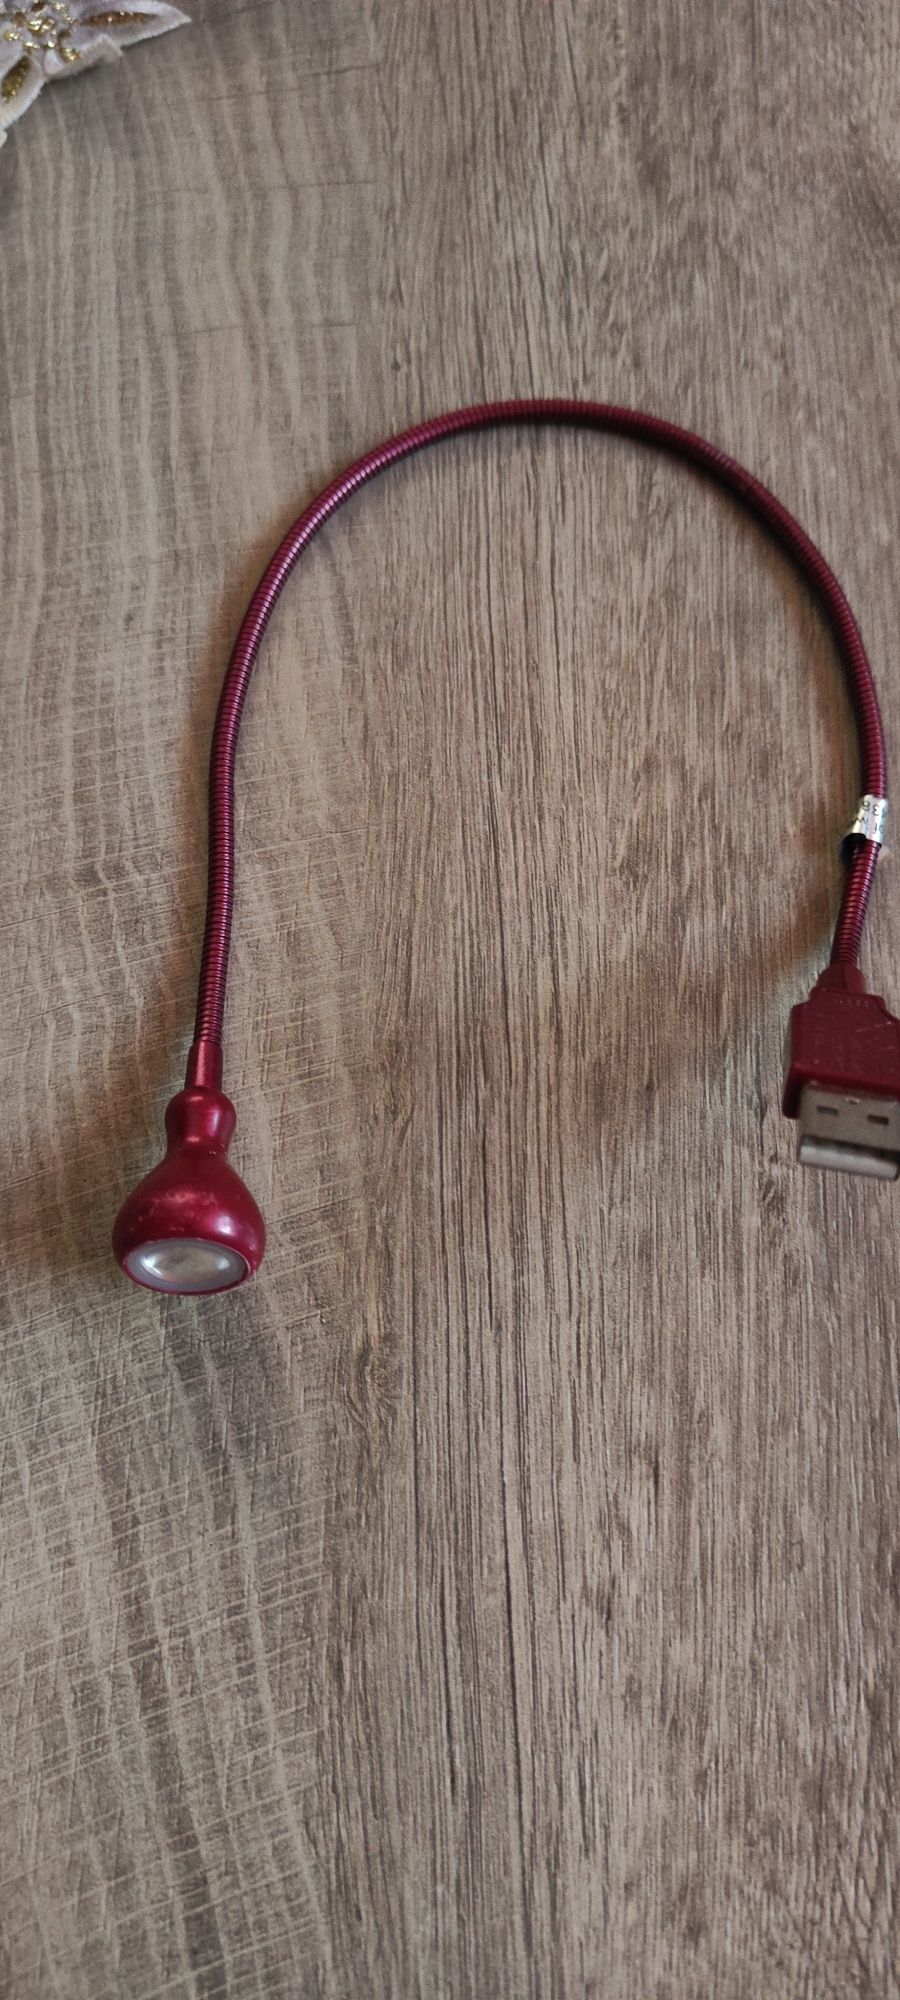 Lampka USB do laptopa